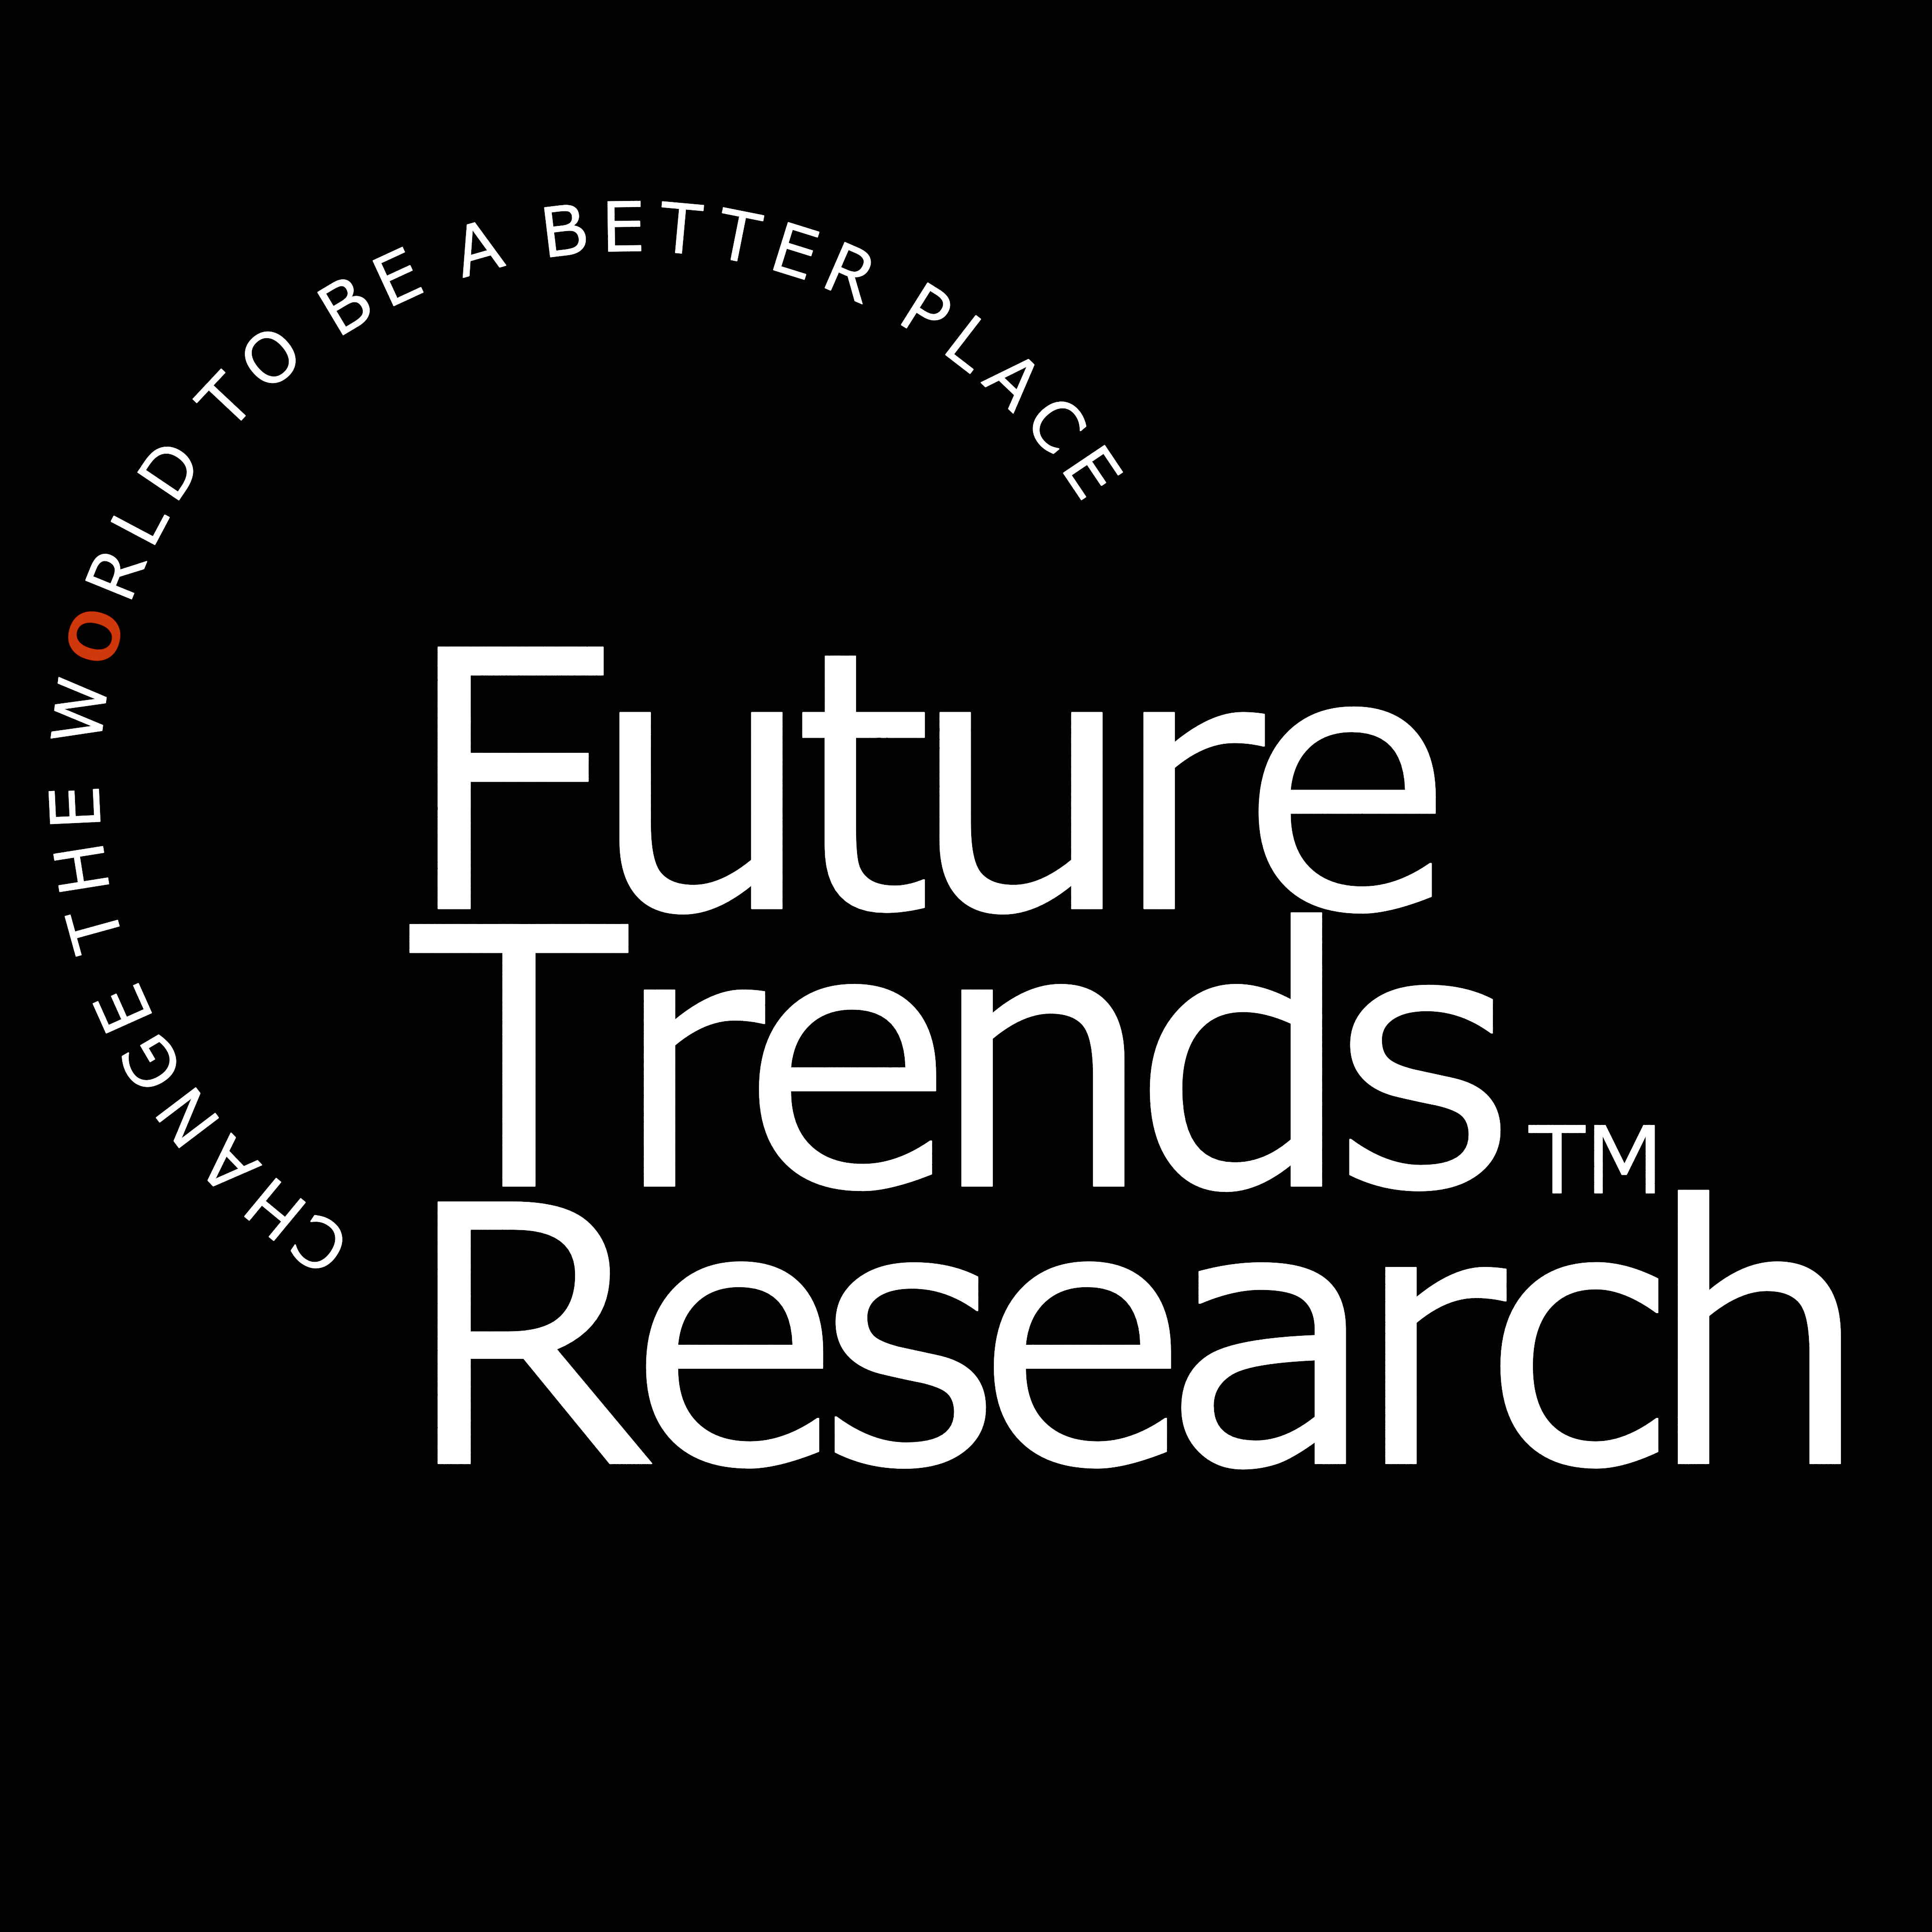 Future Trends Research